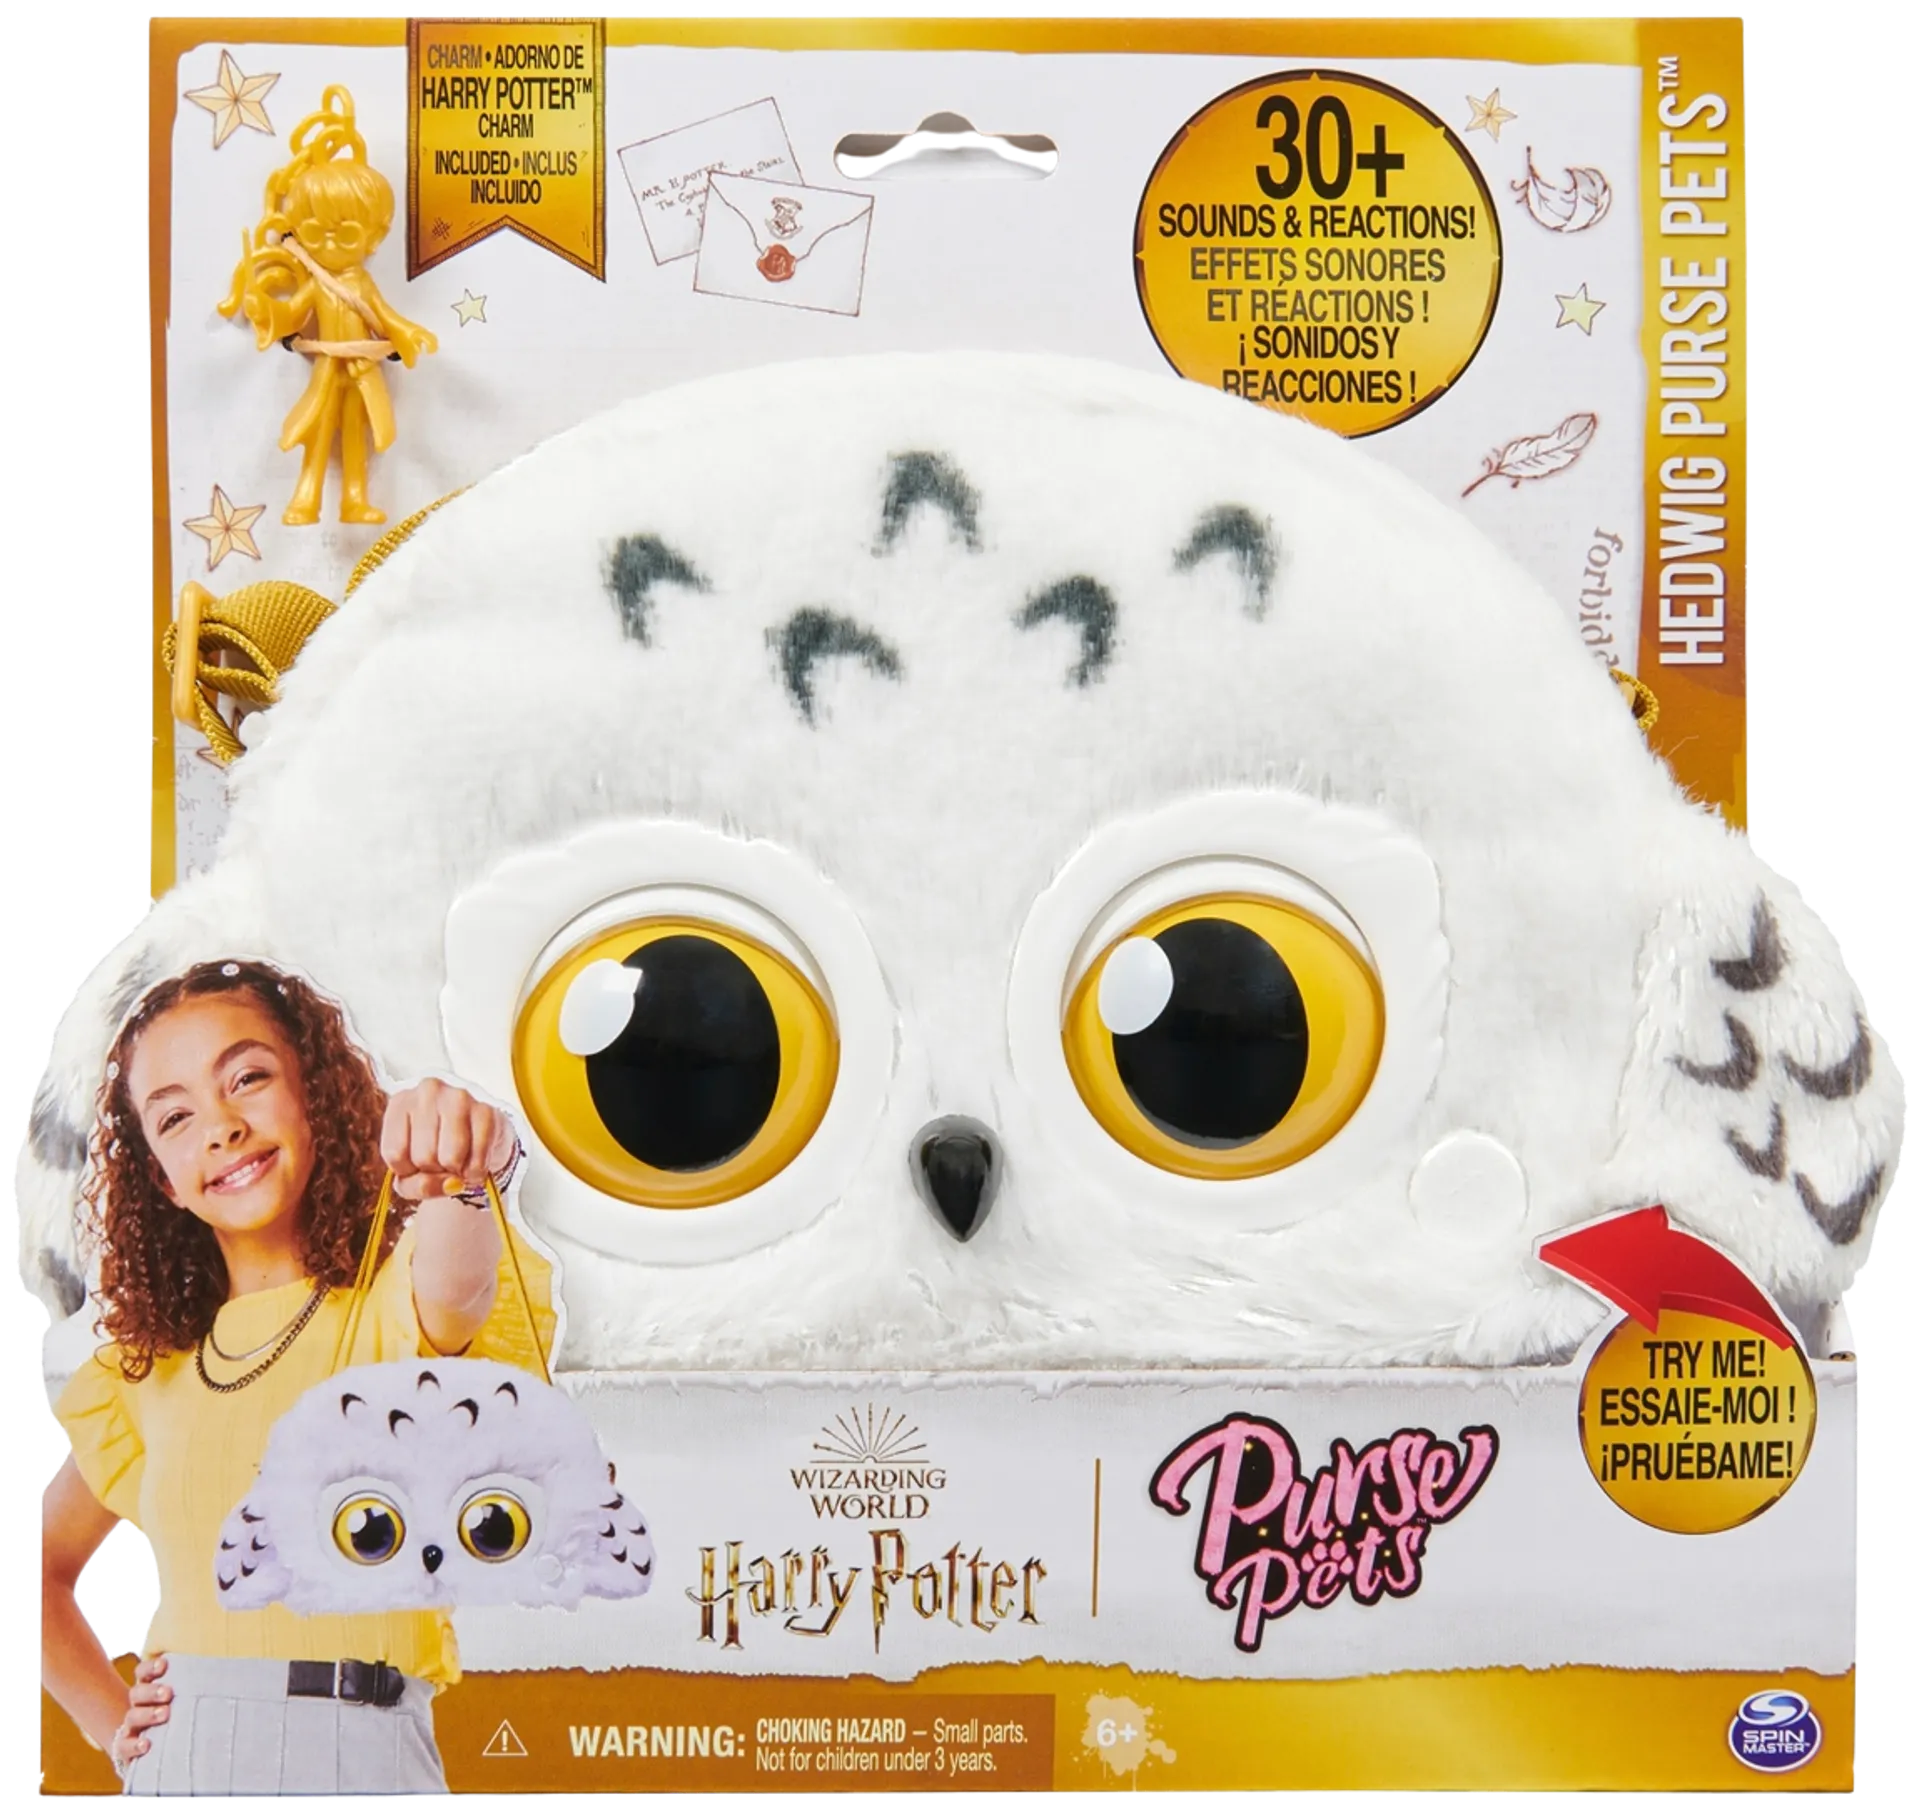 Wizarding World Hedwig Purse Pets - 8